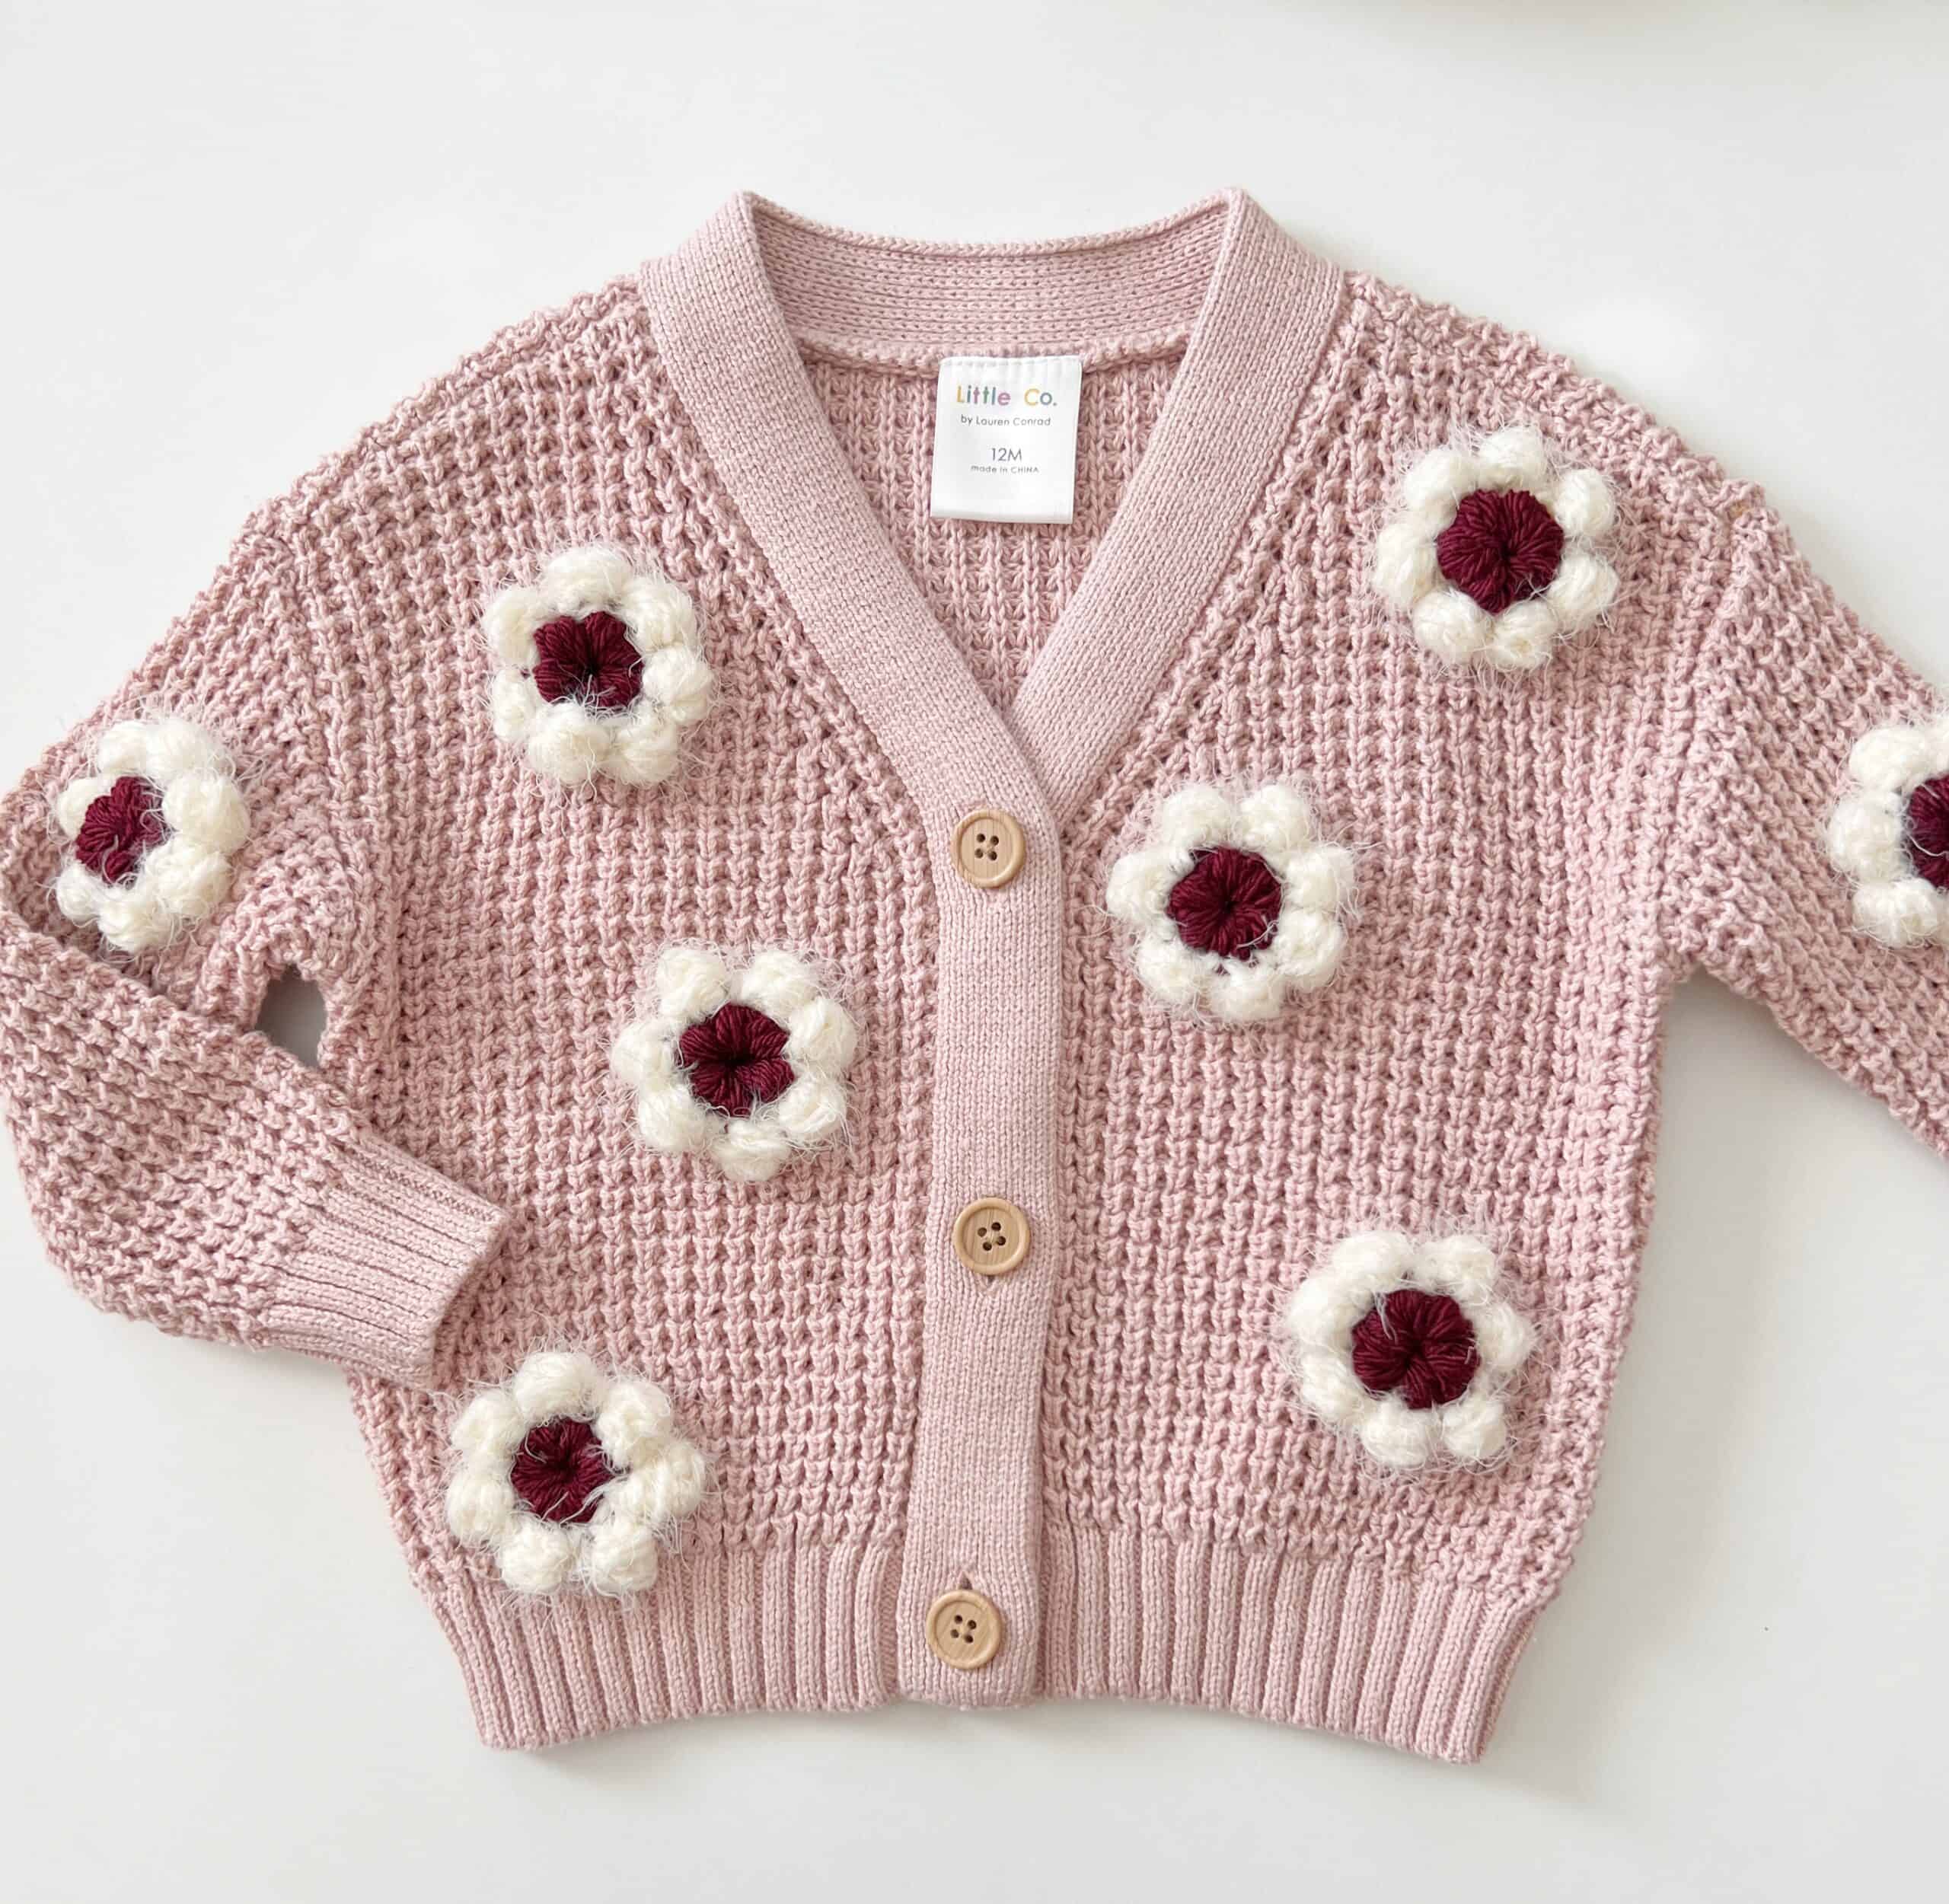 Crochet Cluster Puff Flower Embellishments - Daisy Farm Crafts